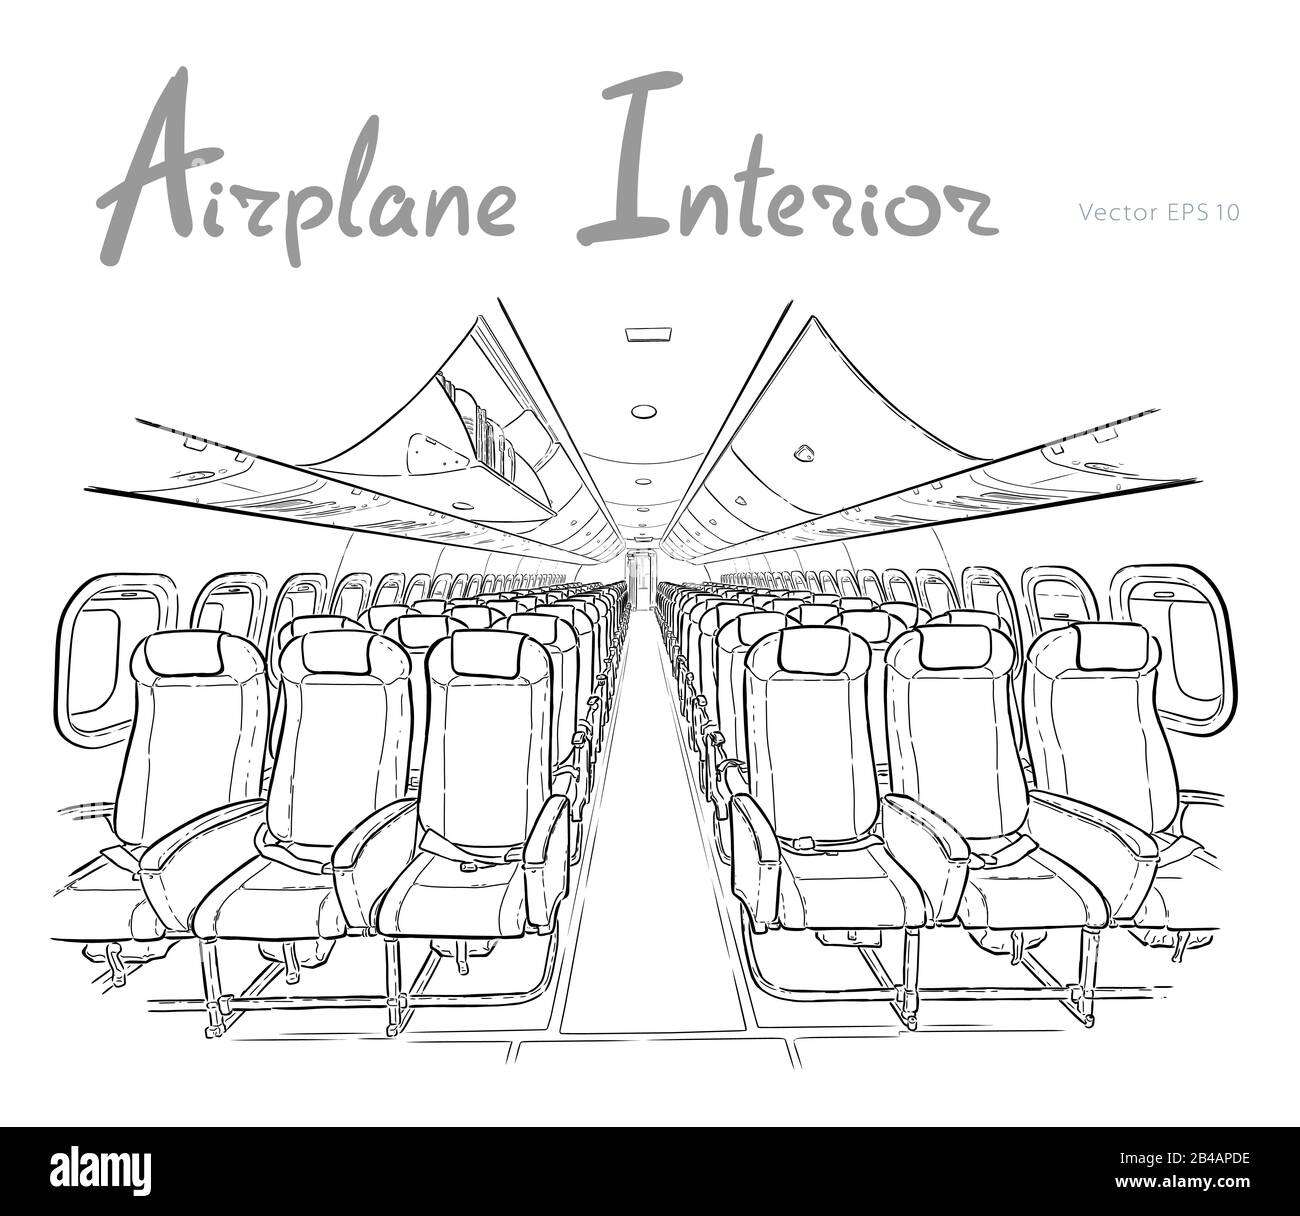 Airplane interior hand drawn sketch vector illustration Stock Vector